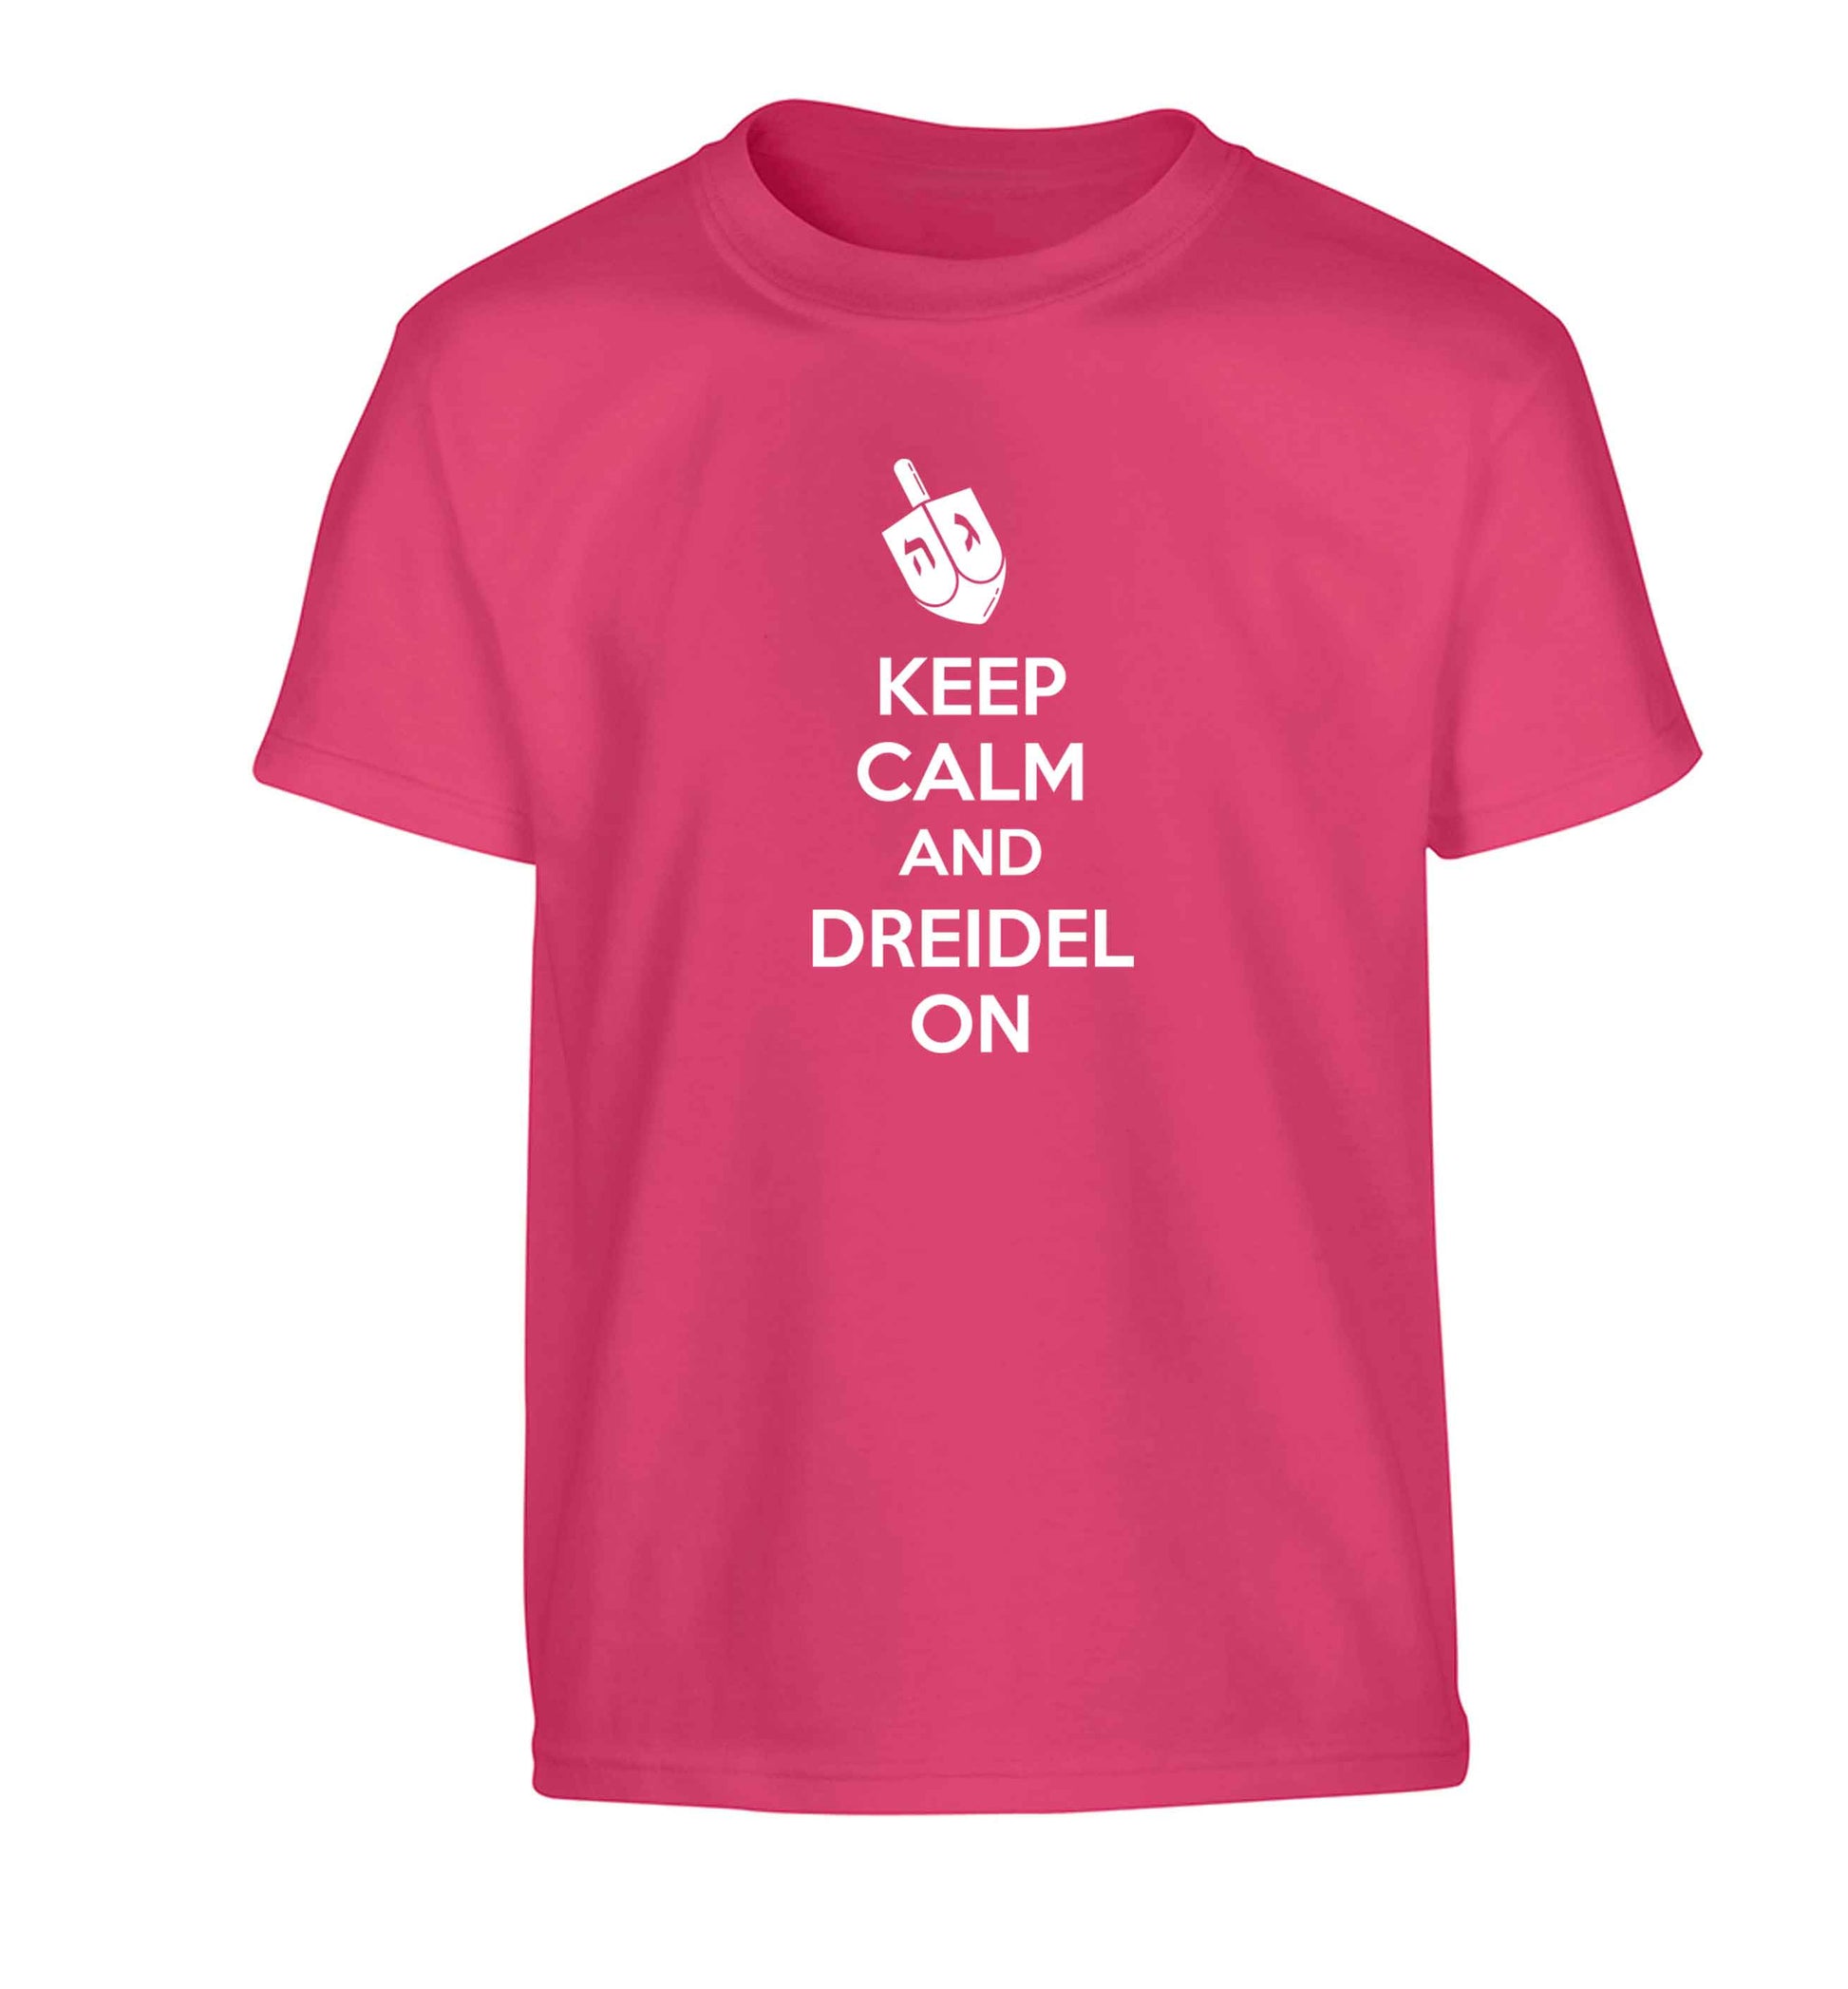 Keep calm and dreidel on Children's pink Tshirt 12-13 Years